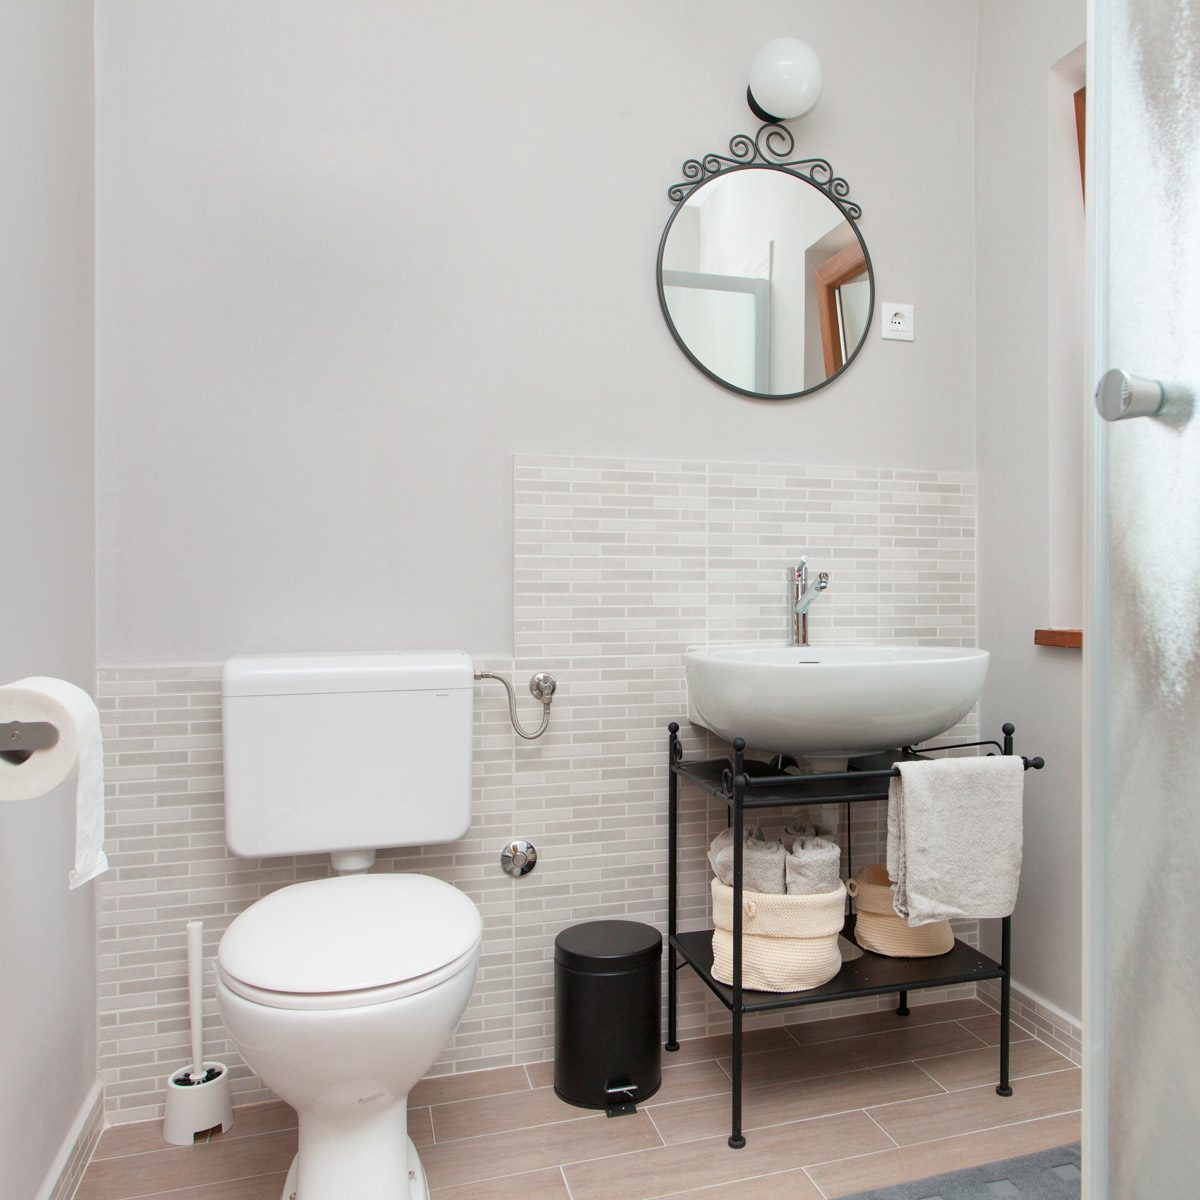 Images Of Small Bathroom
 10 Small Bathroom Ideas That Make a Big Impact